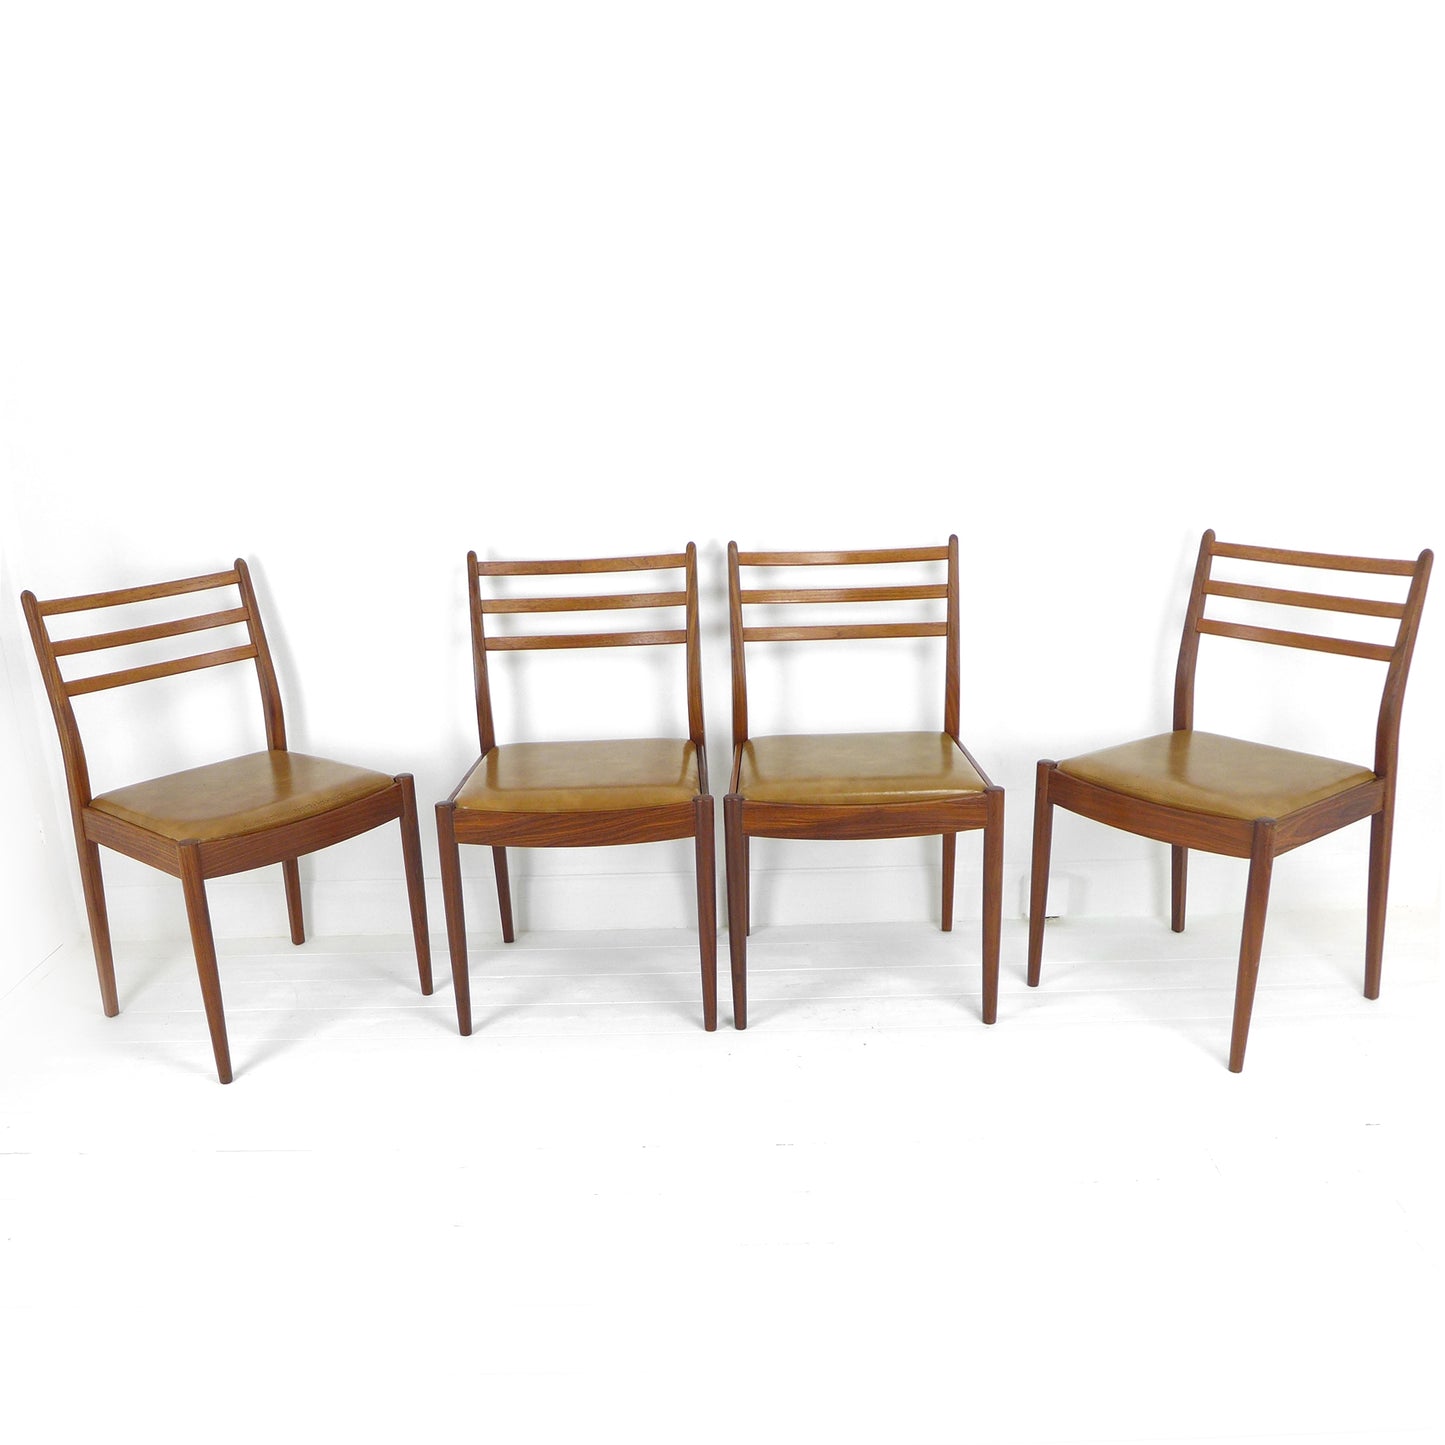 Vintage G PLAN Dining Chairs x4 - Original Leather Seats - Mid Century Teak Set of 4